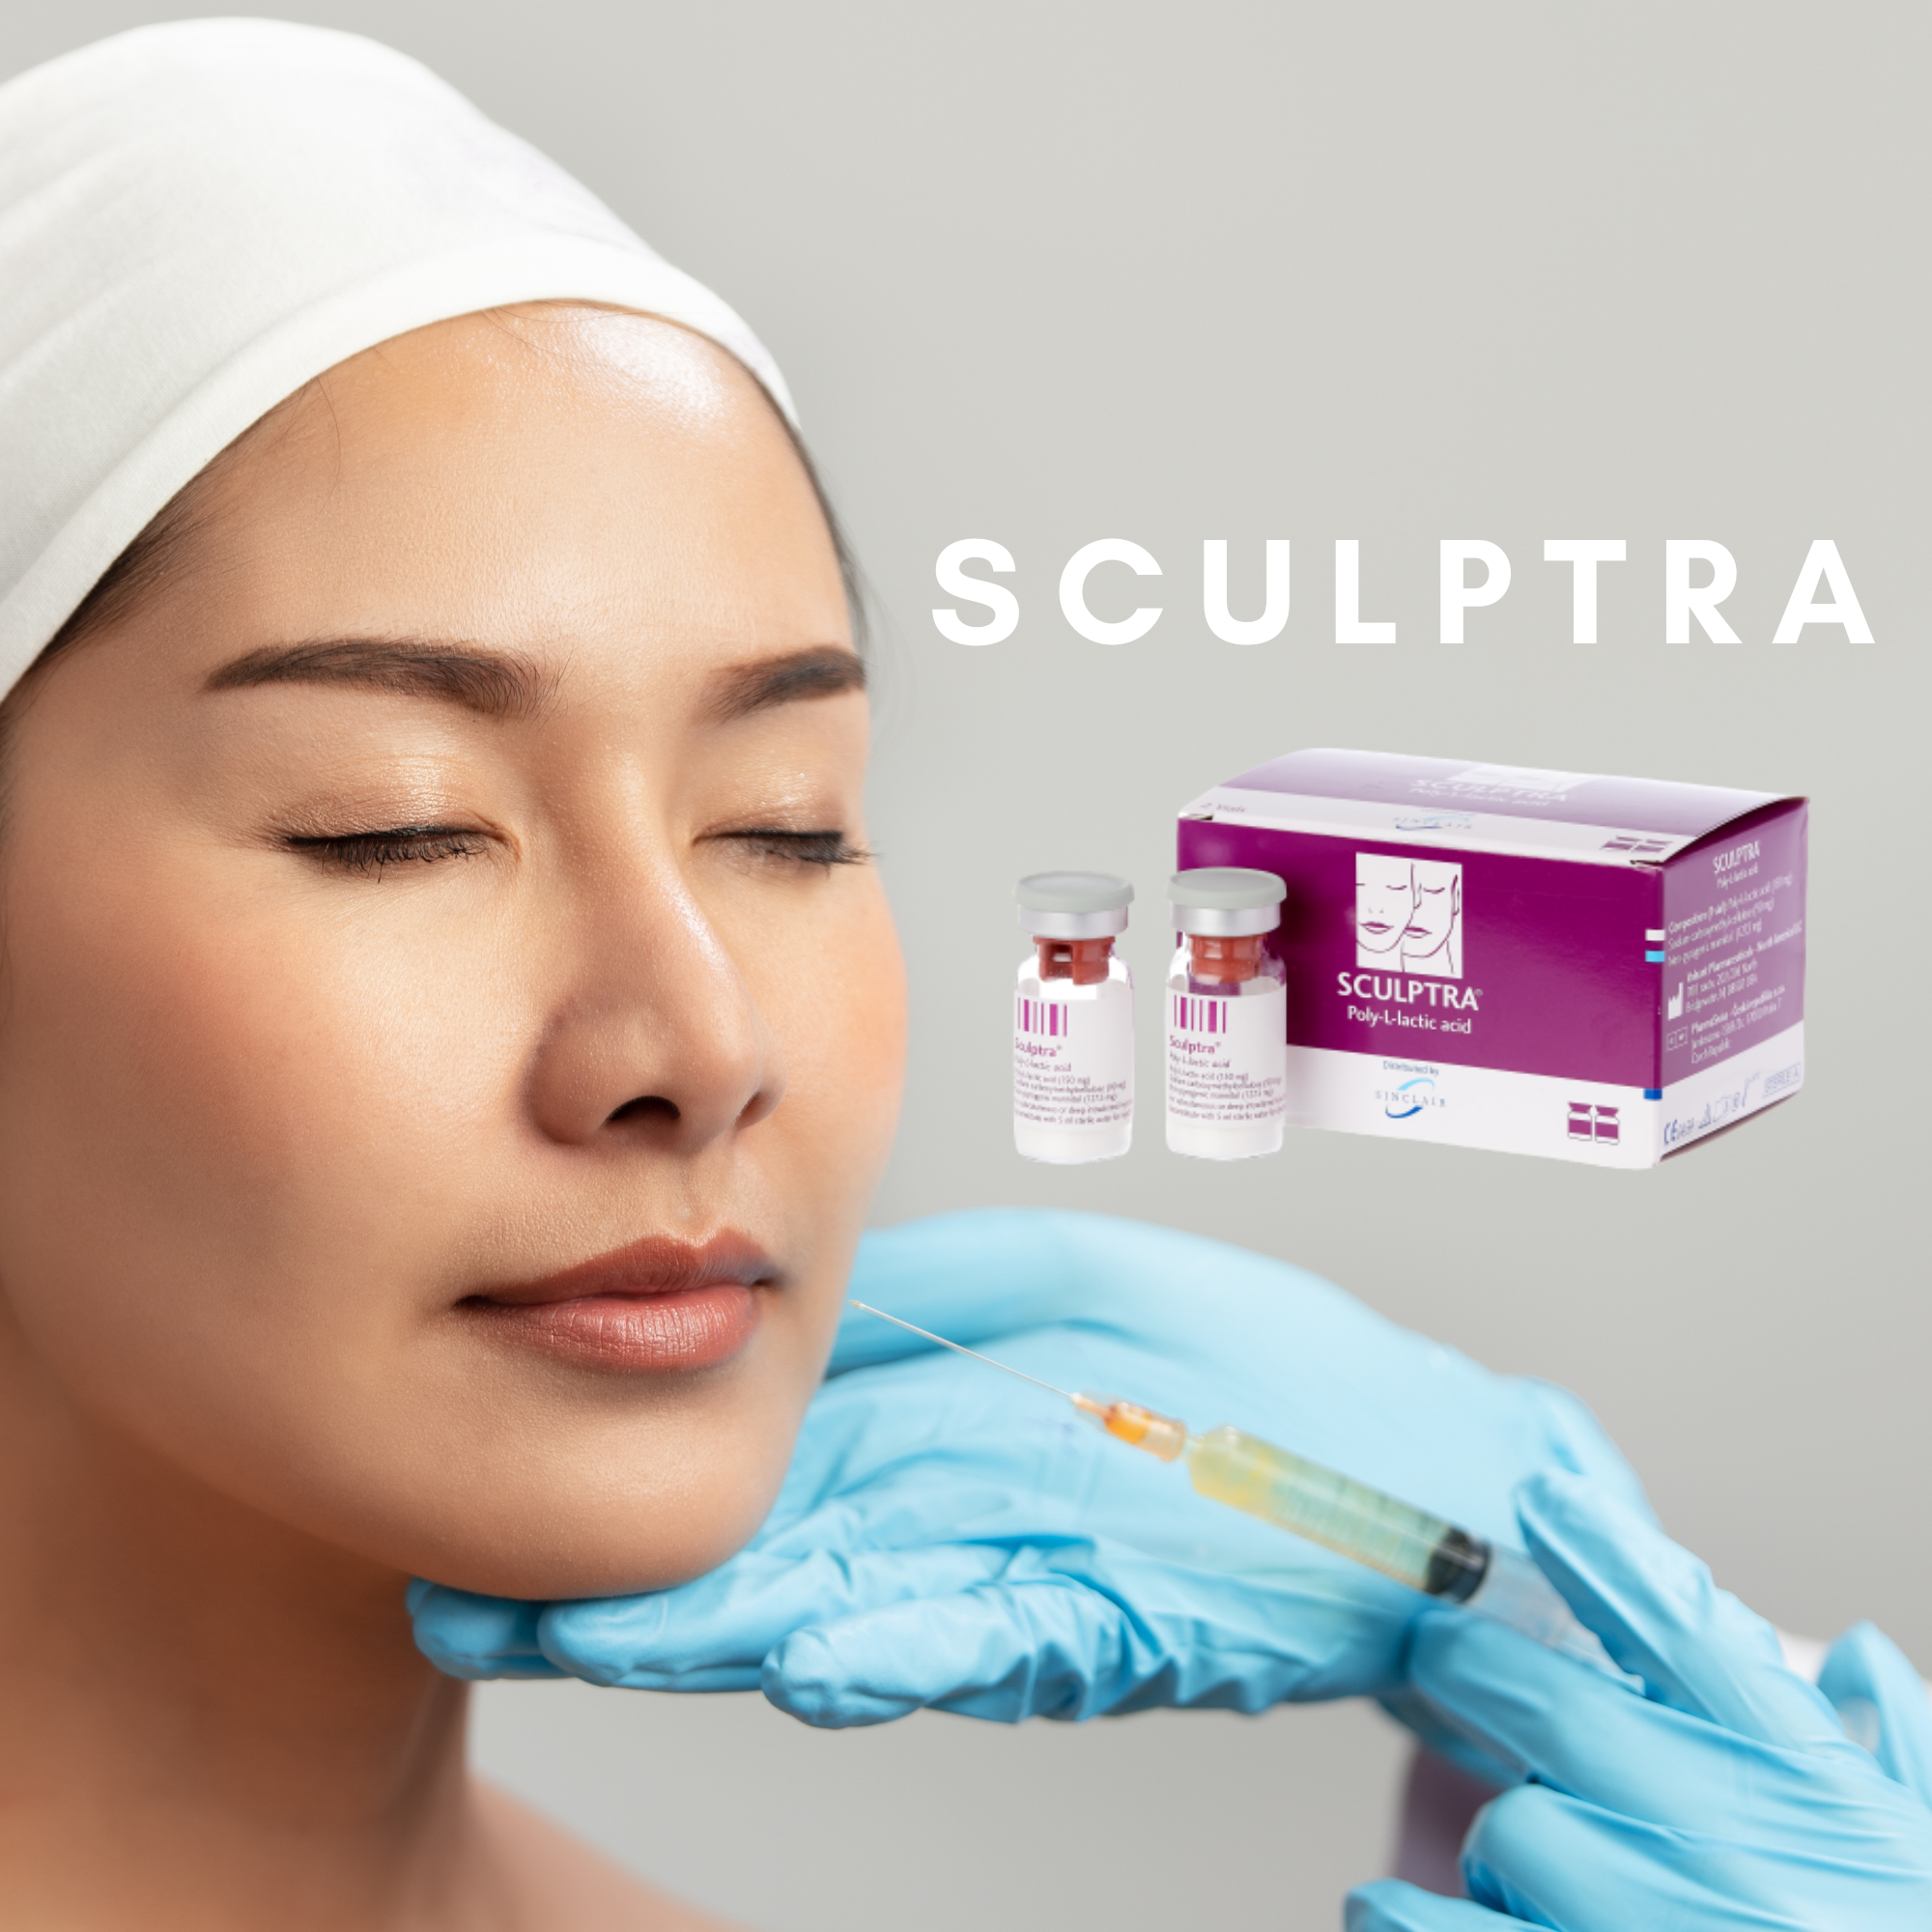 SCULPTRA® Non-Surgical Butt Lift